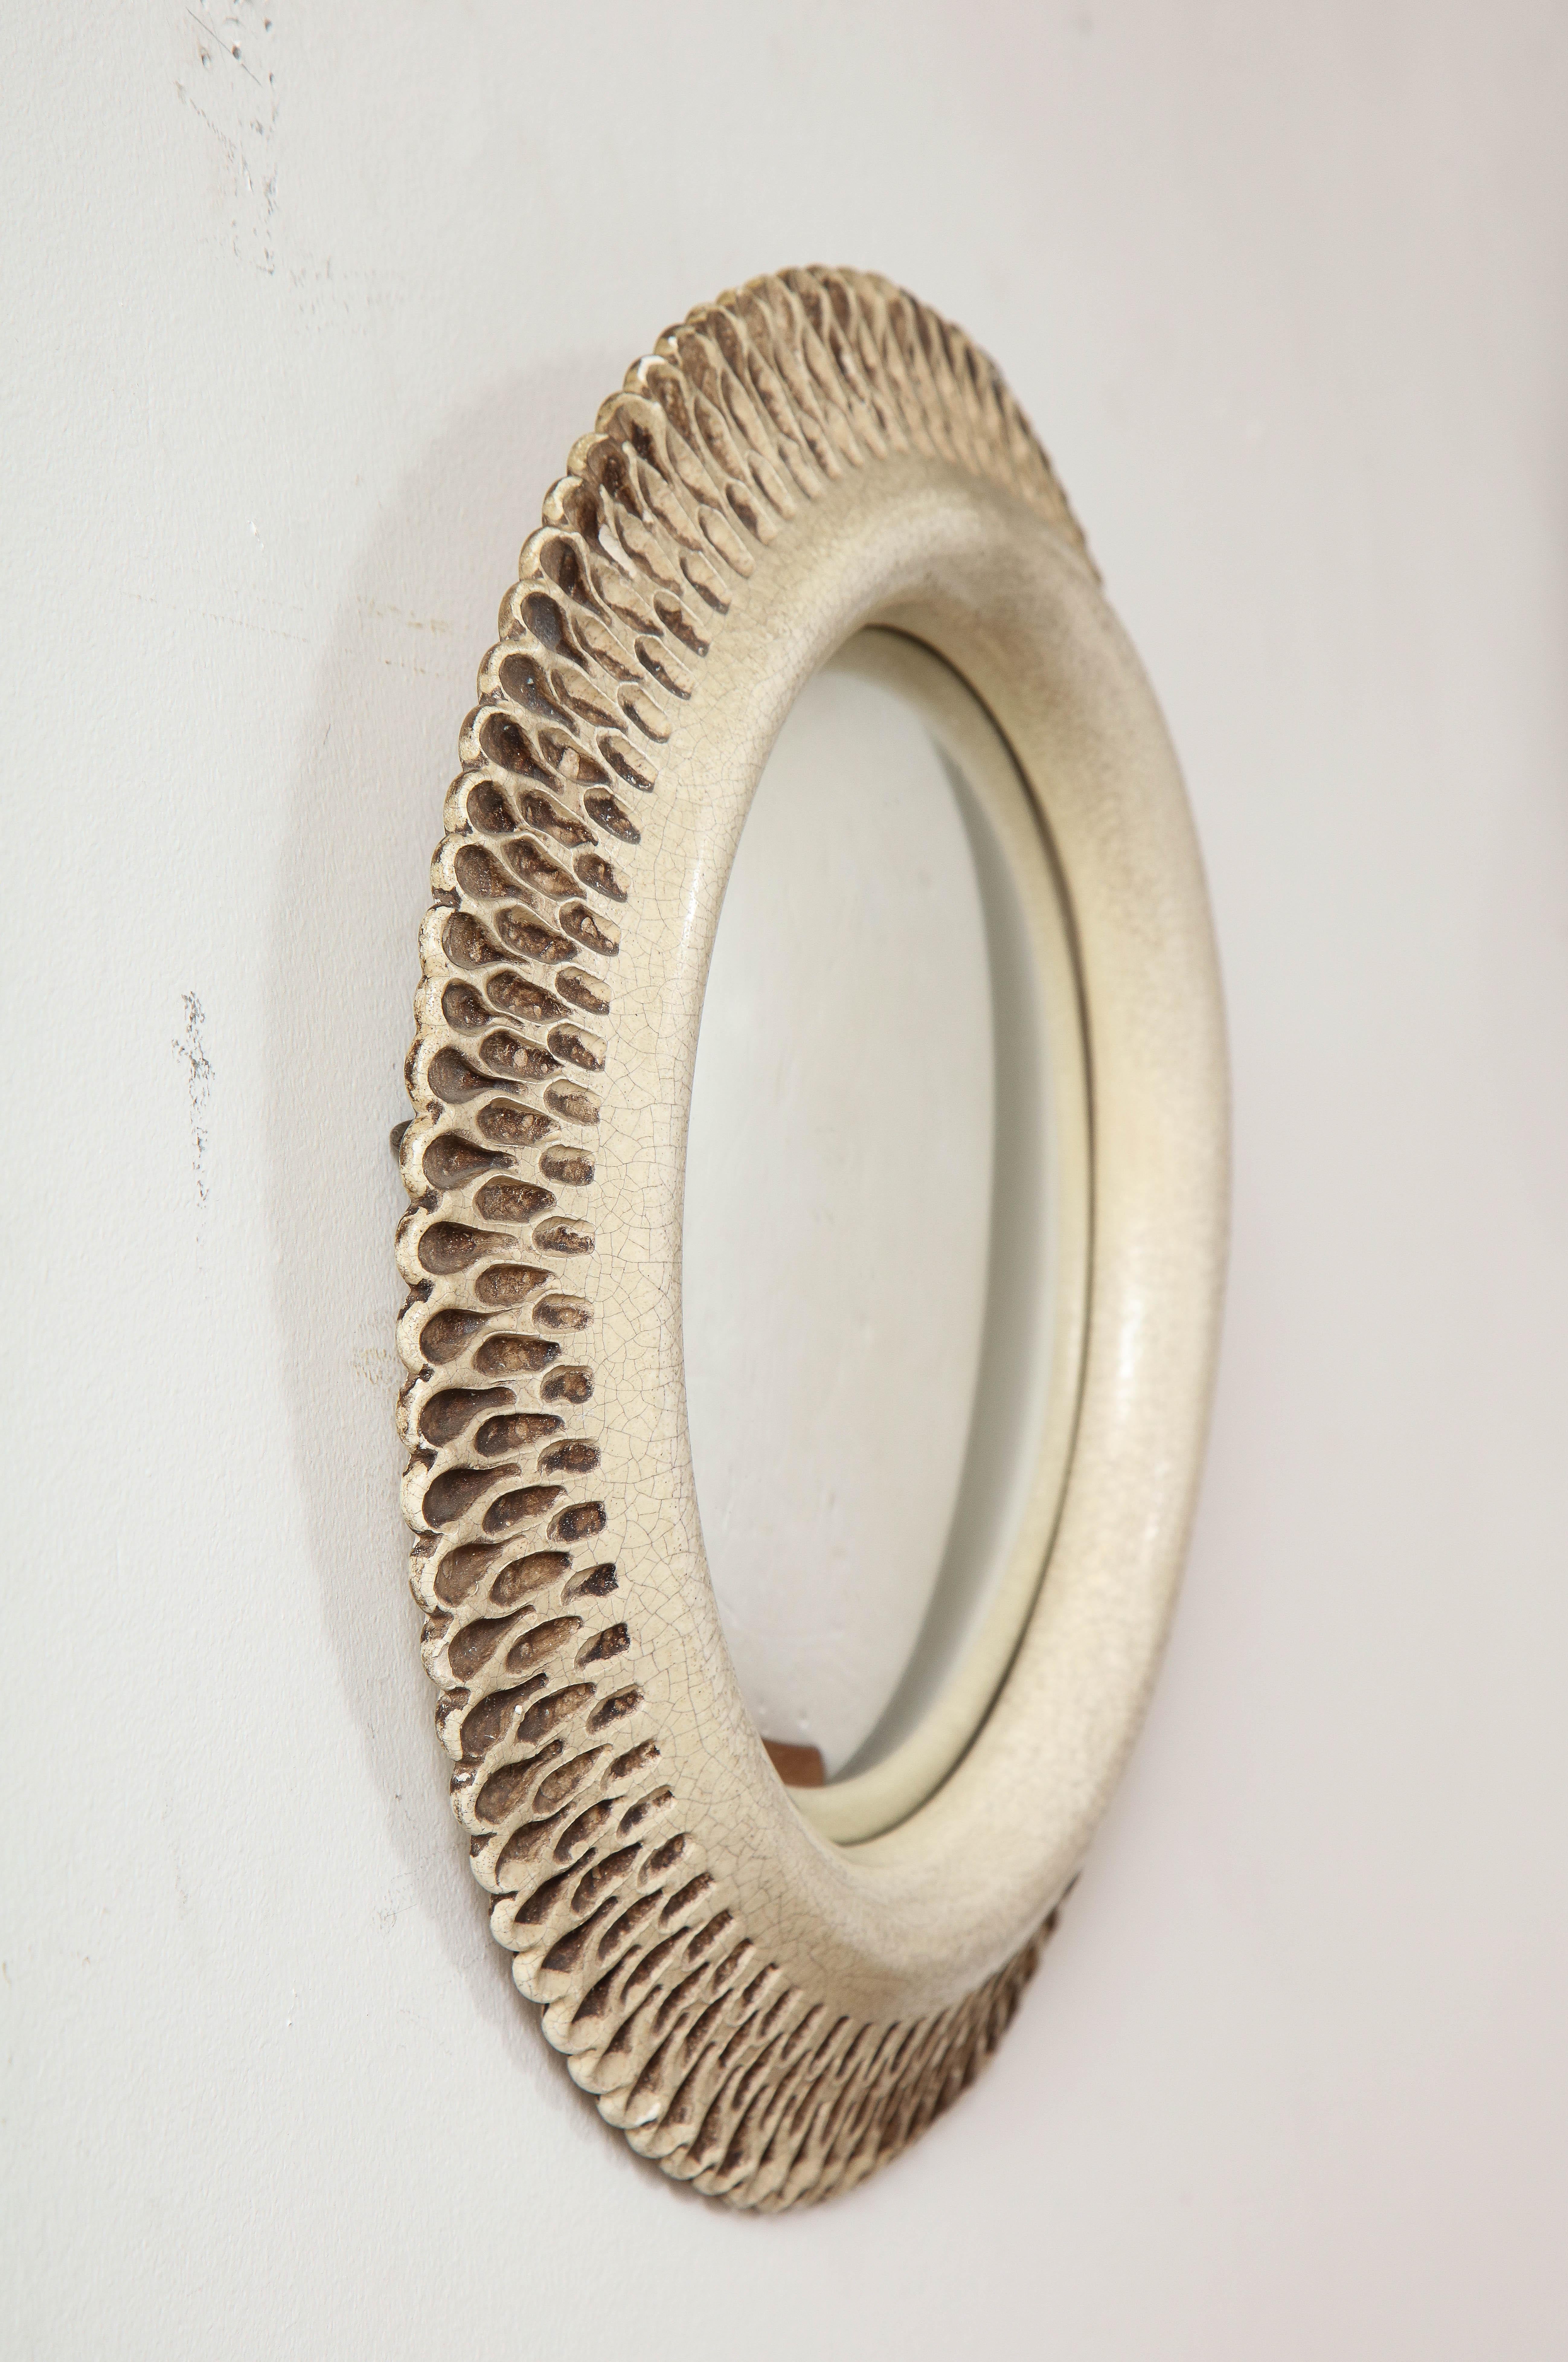 Ceramic Jean Besnard Convex Mirror, France, c. 1930-40's